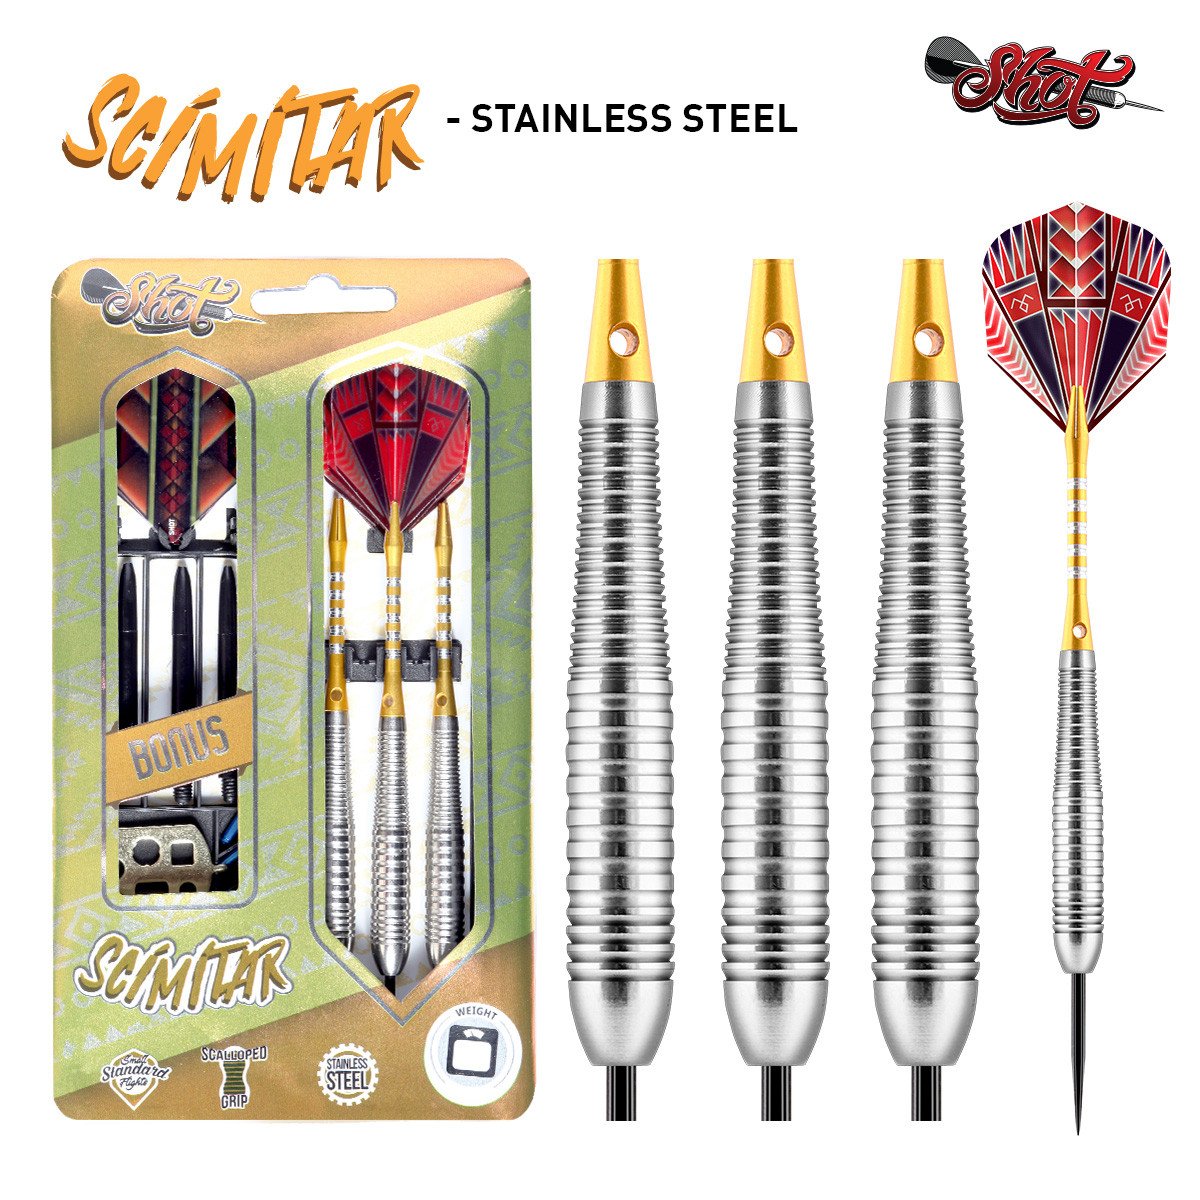 Shot Scimitar Steel-tip Darts